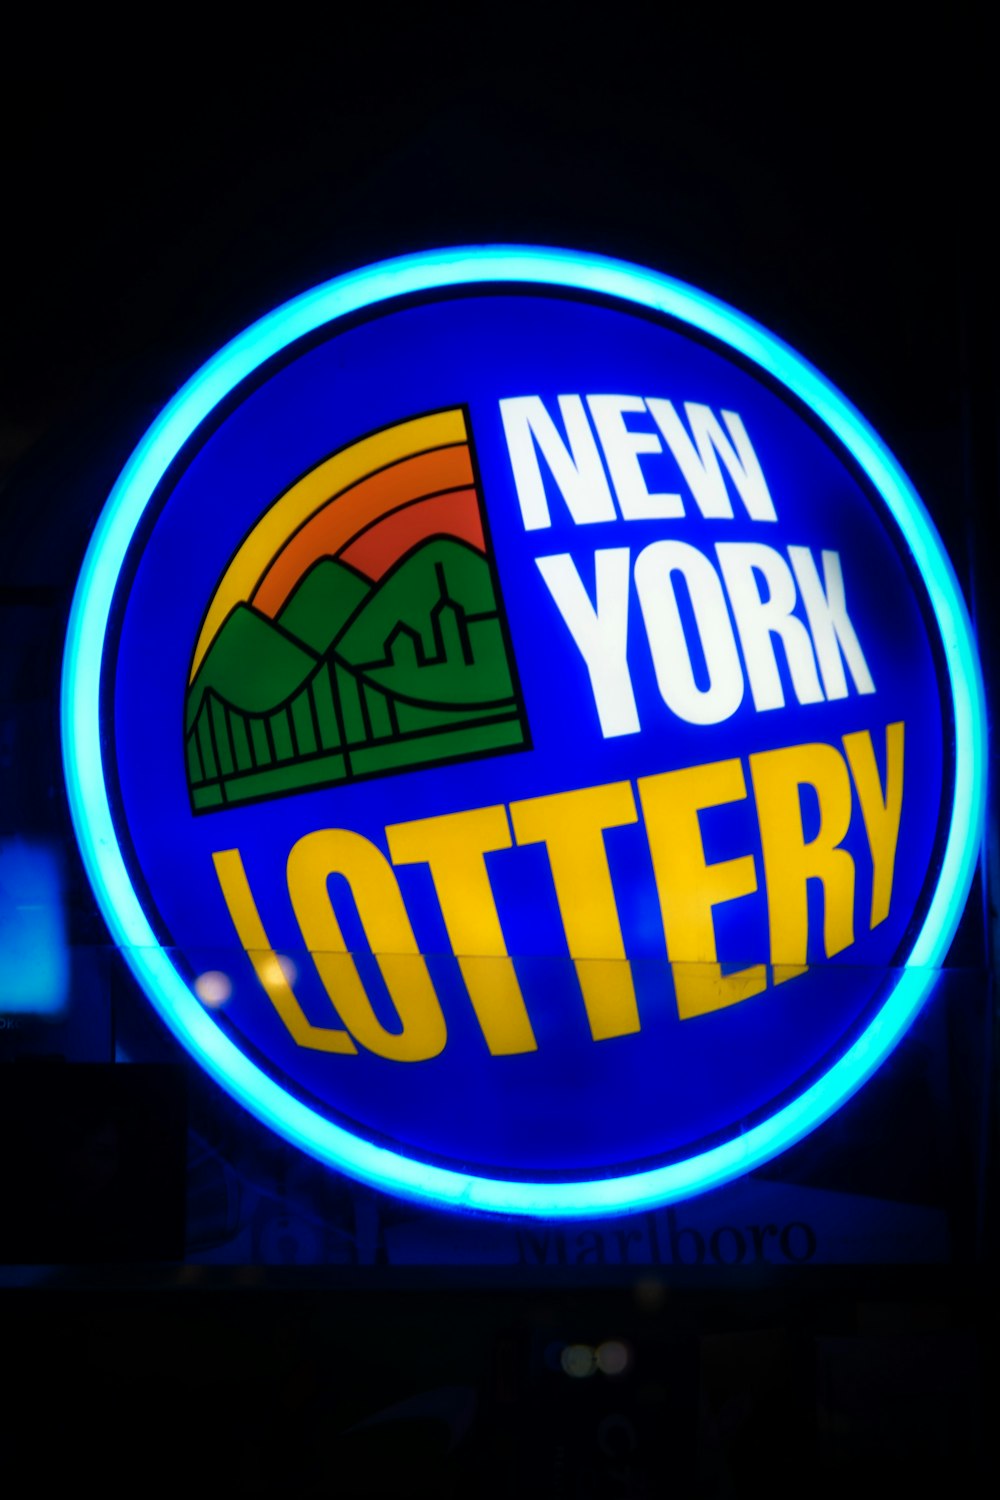 New York Lottery logo